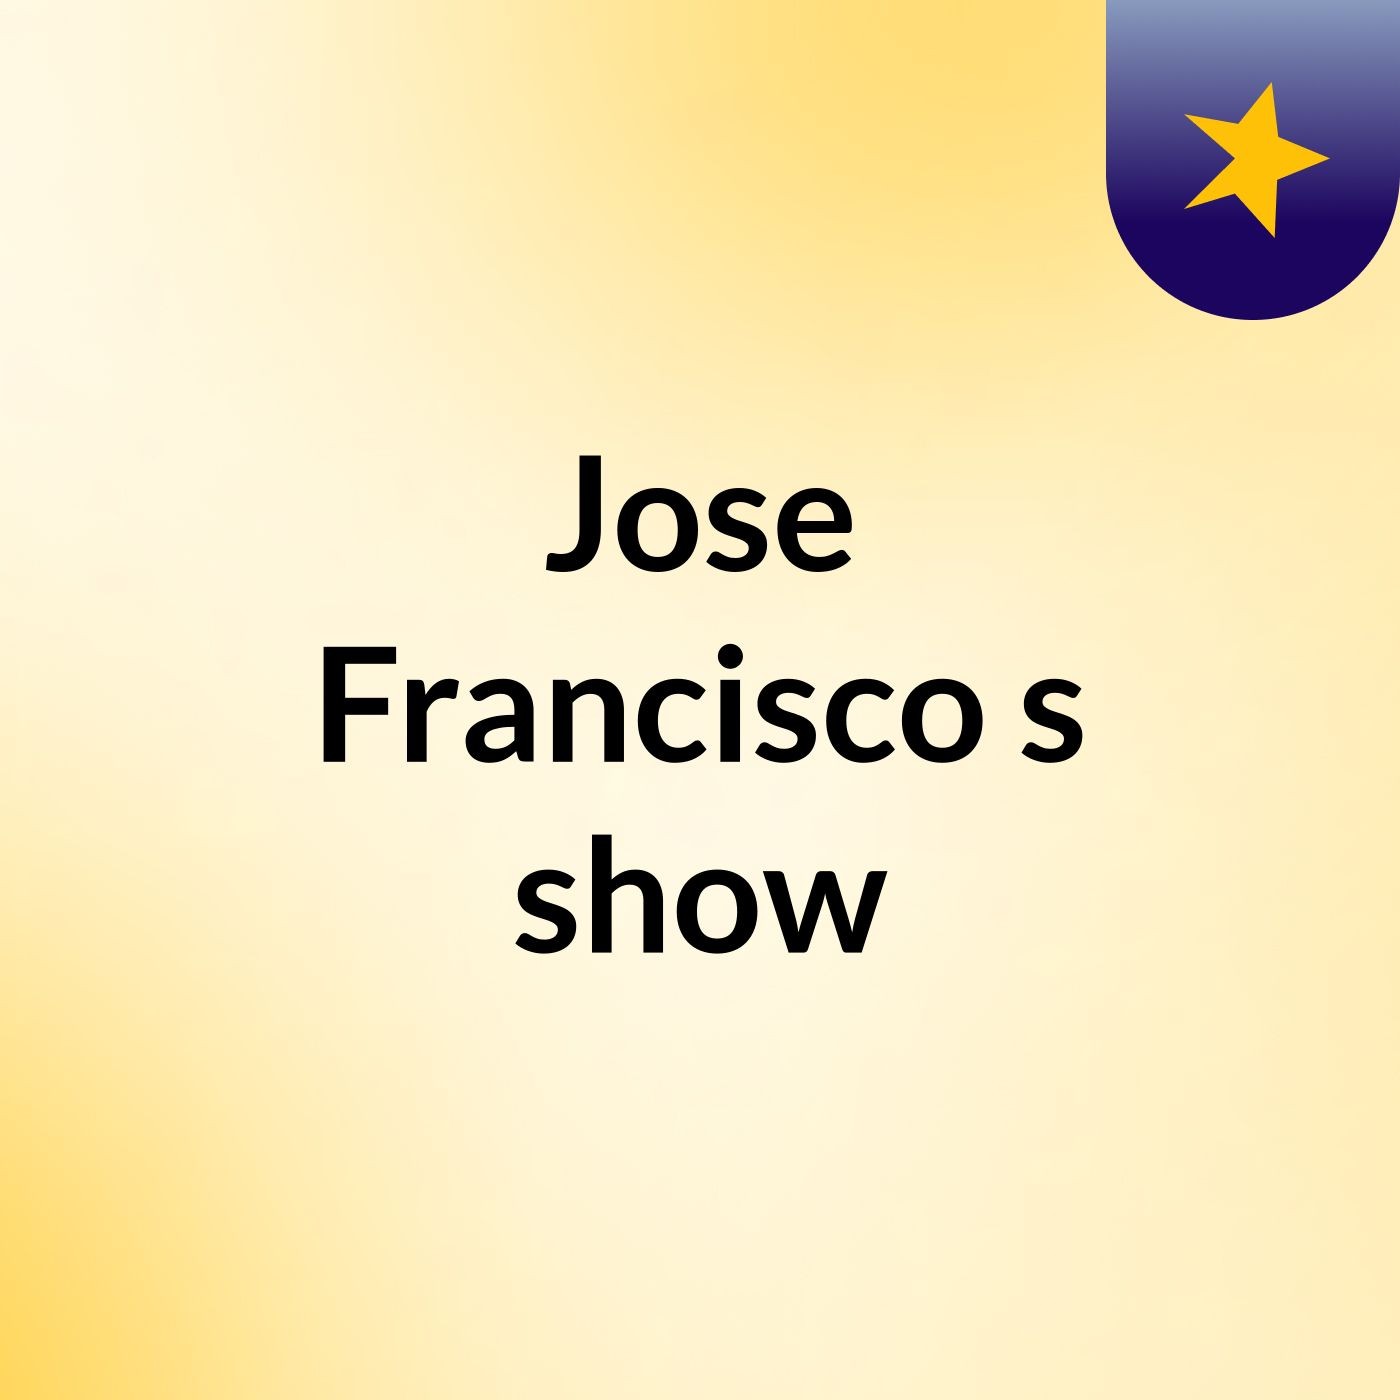 Jose Francisco's show